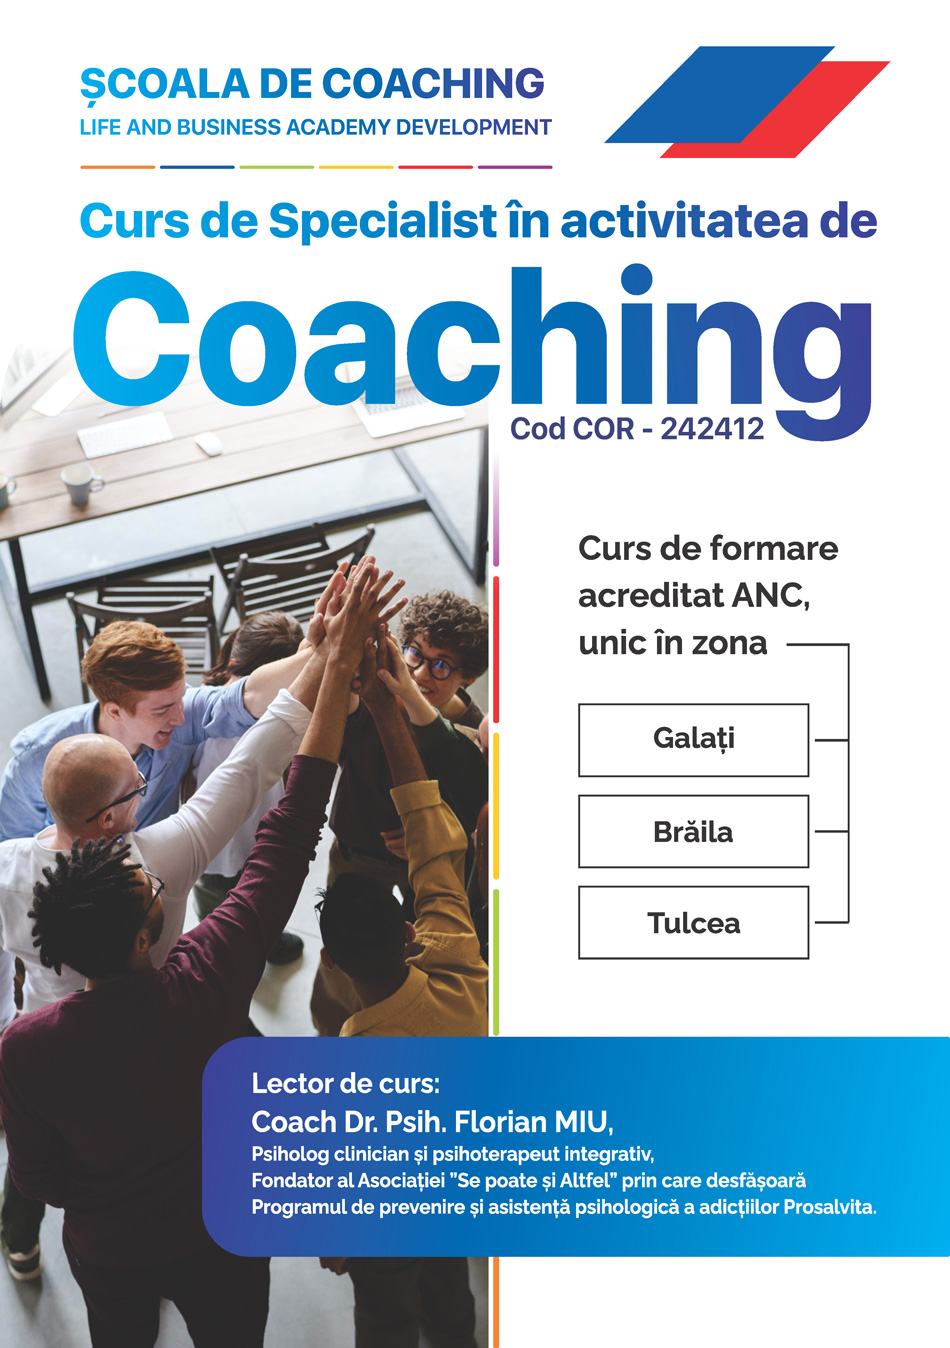 Curs de Specialist in Coaching, acreditat A.N.C.